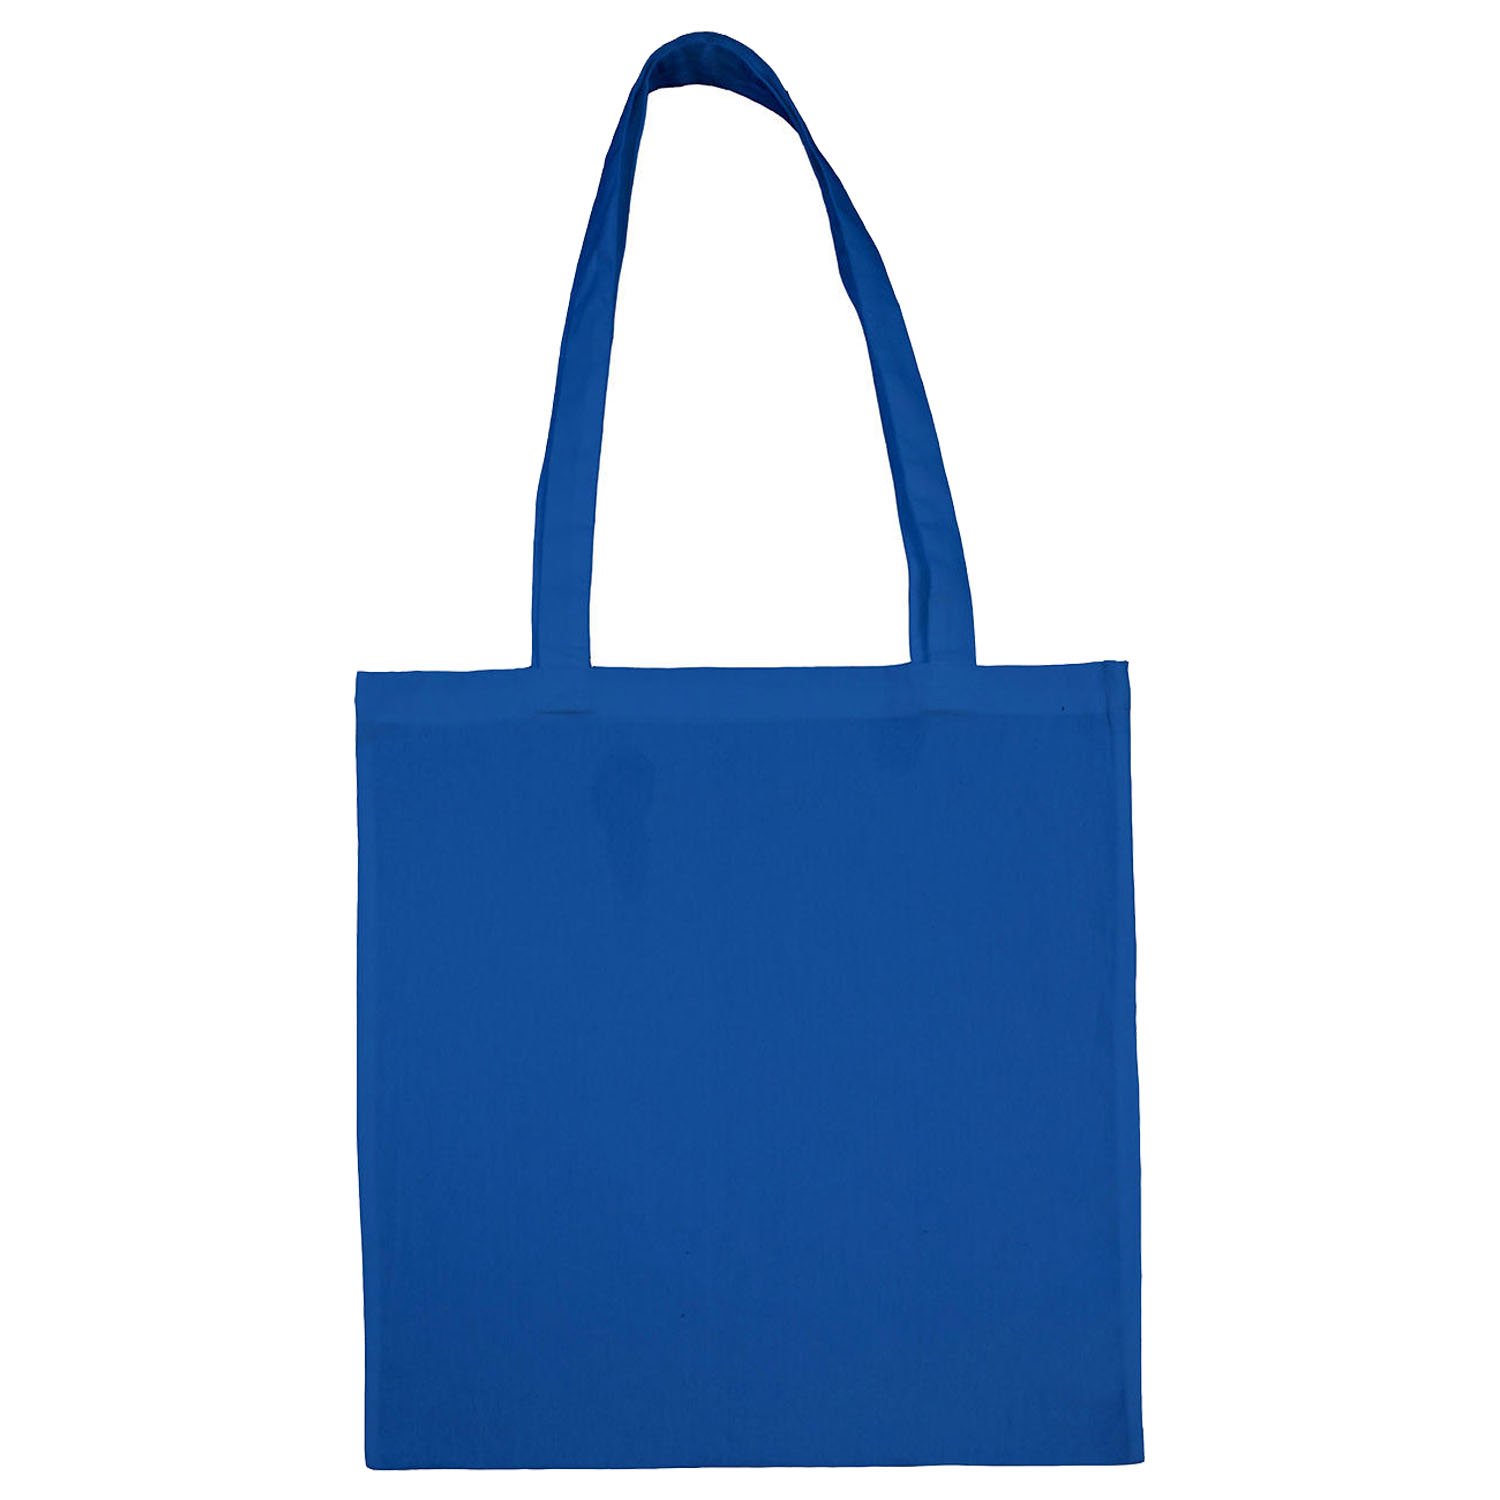 NWT! Tory Burch Ella Nylon Shoulder Bag Tote Navy Blue $248 | eBay-demhanvico.com.vn